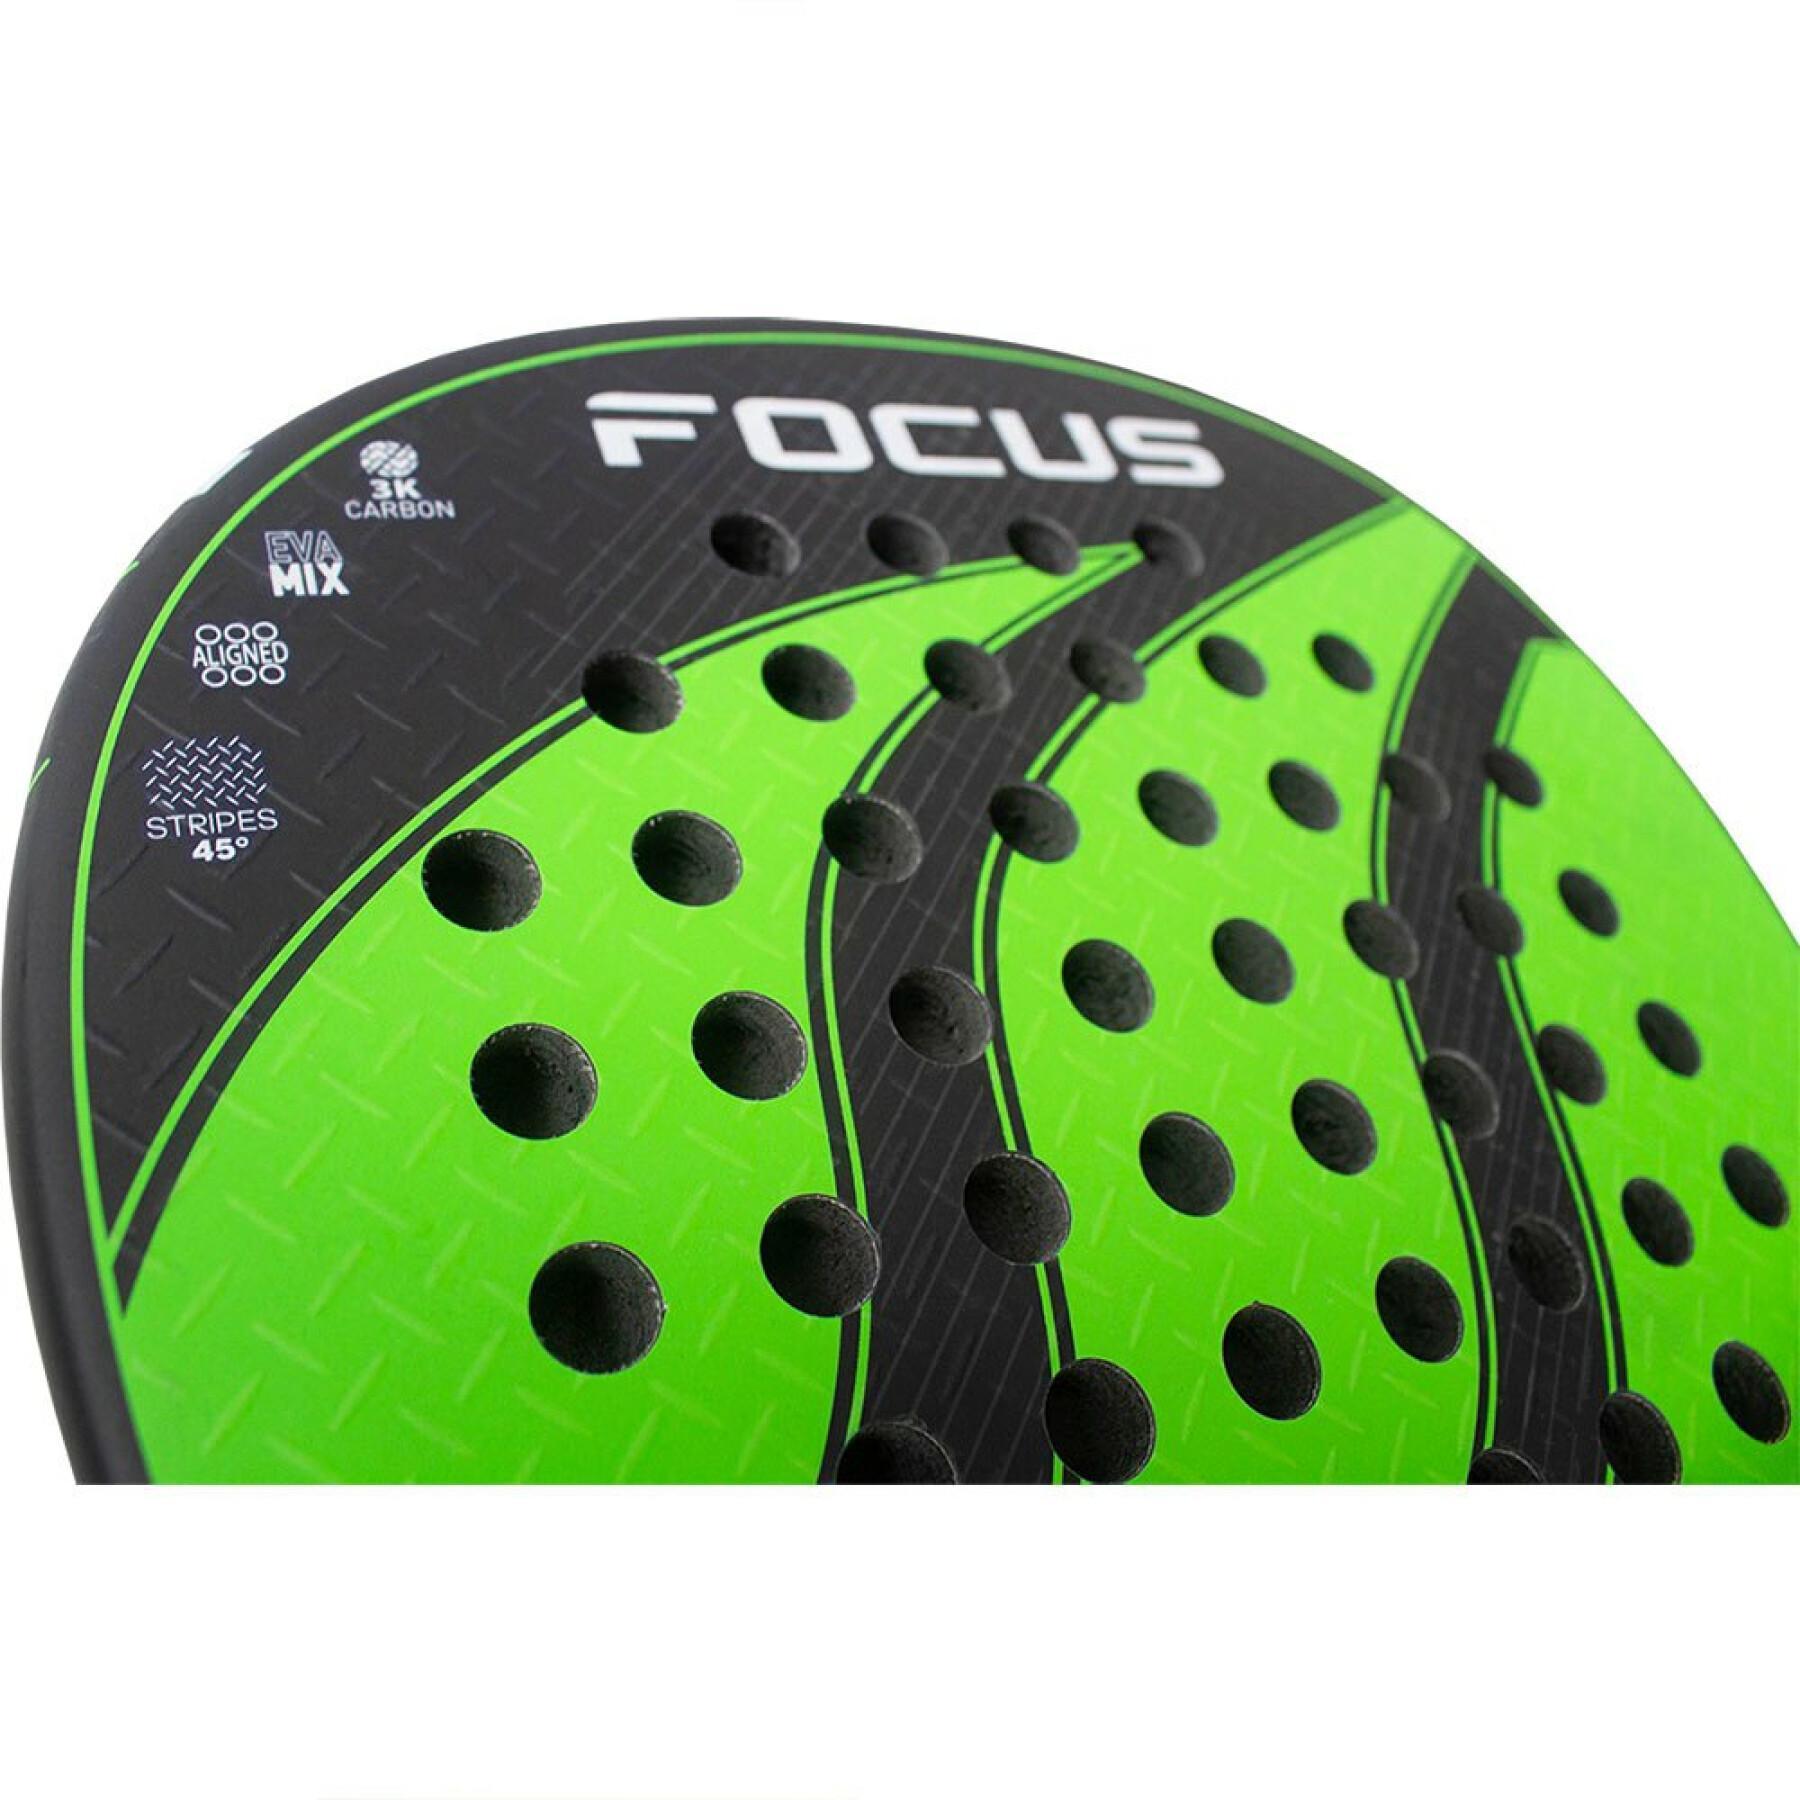 Padel racket Side Spin Ss Focus Fcd 3K